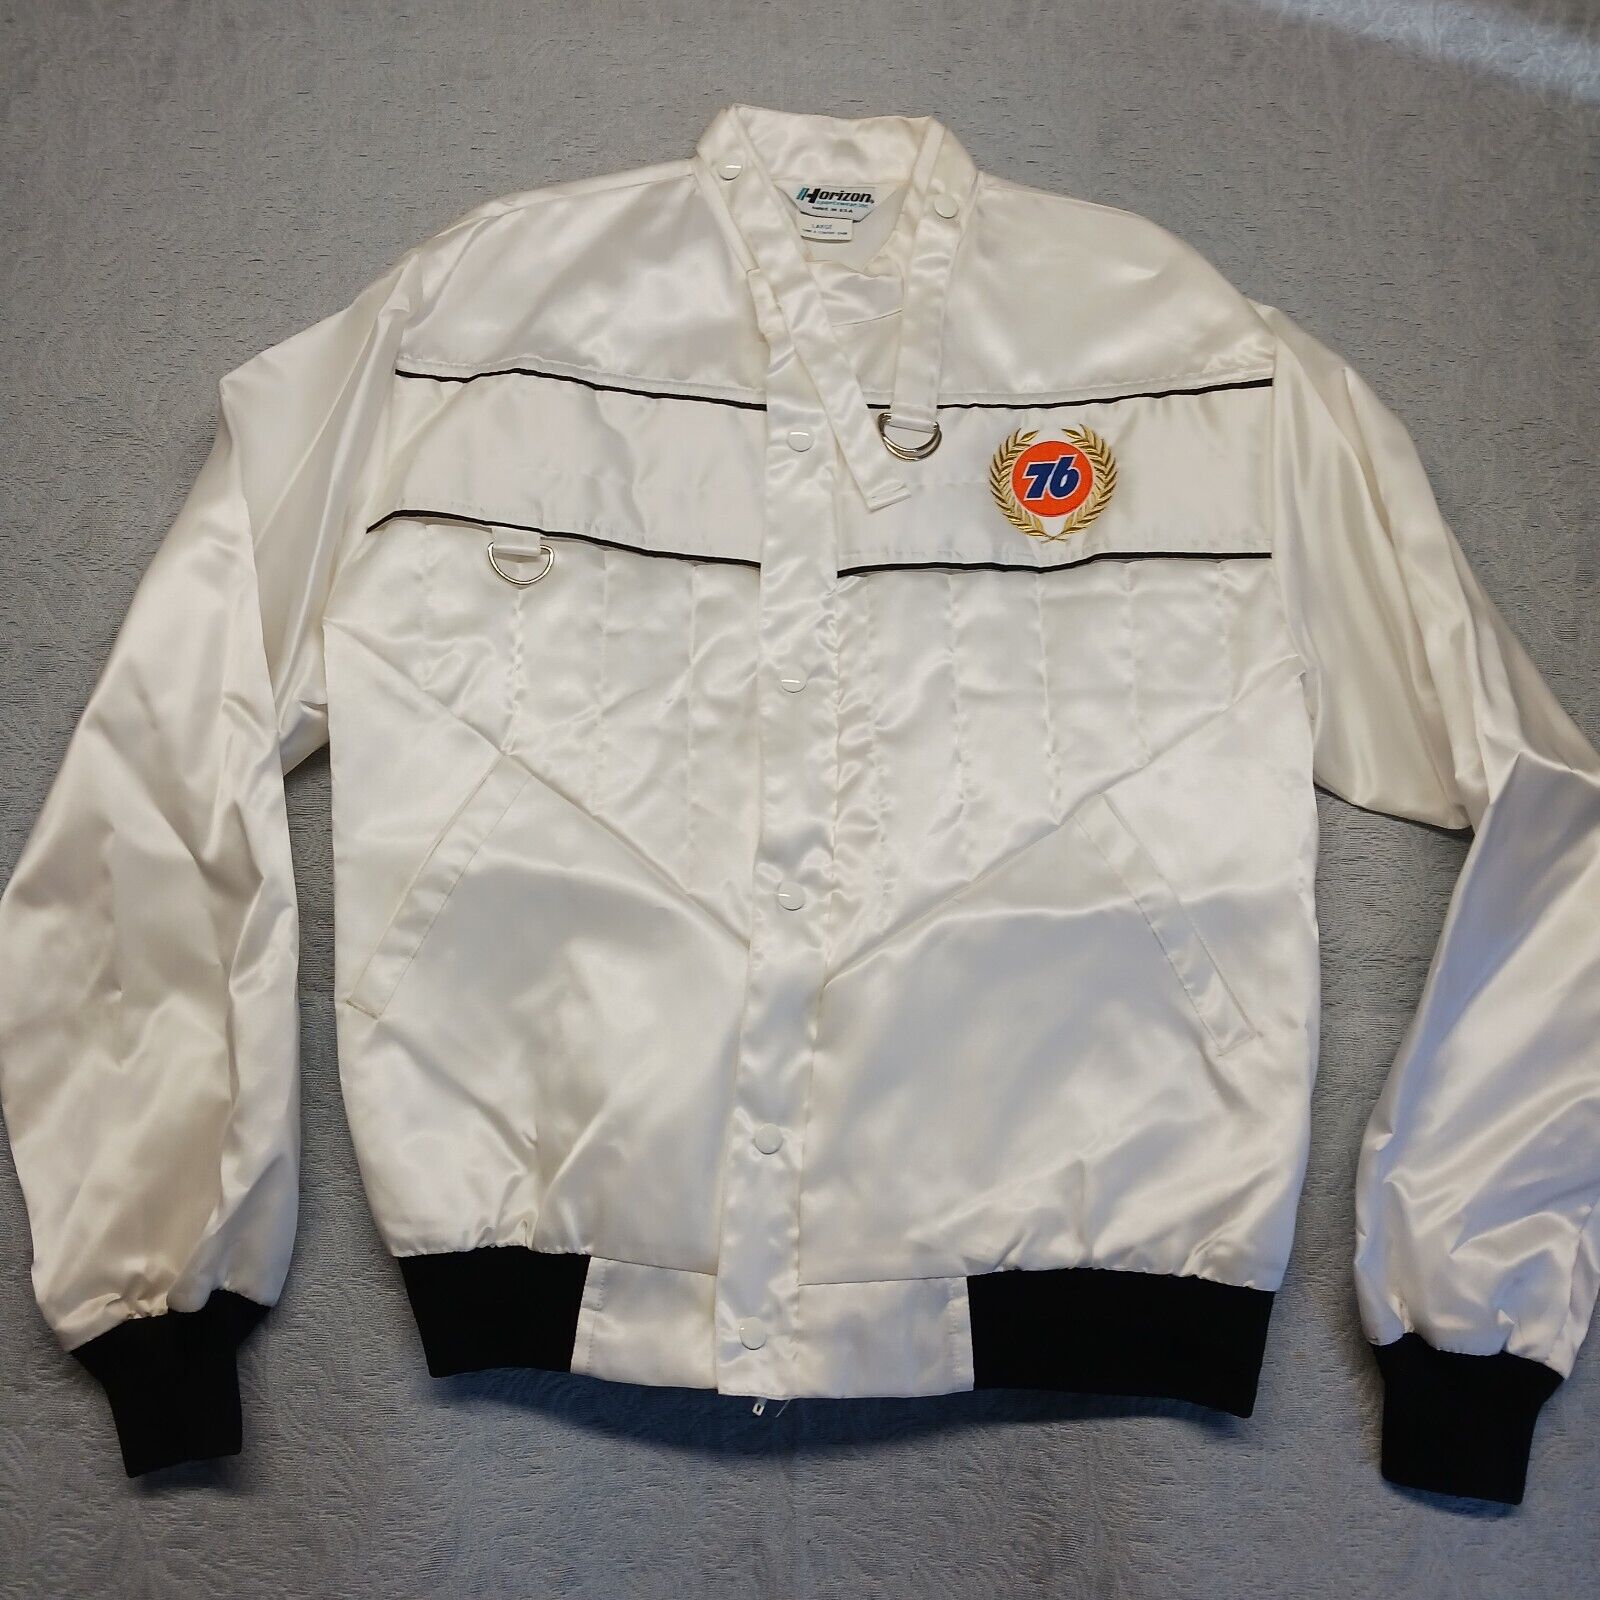 New Old Stock Vintage Unocal 76 #1 Team Horizon Sportswear Satin Jacket Size M